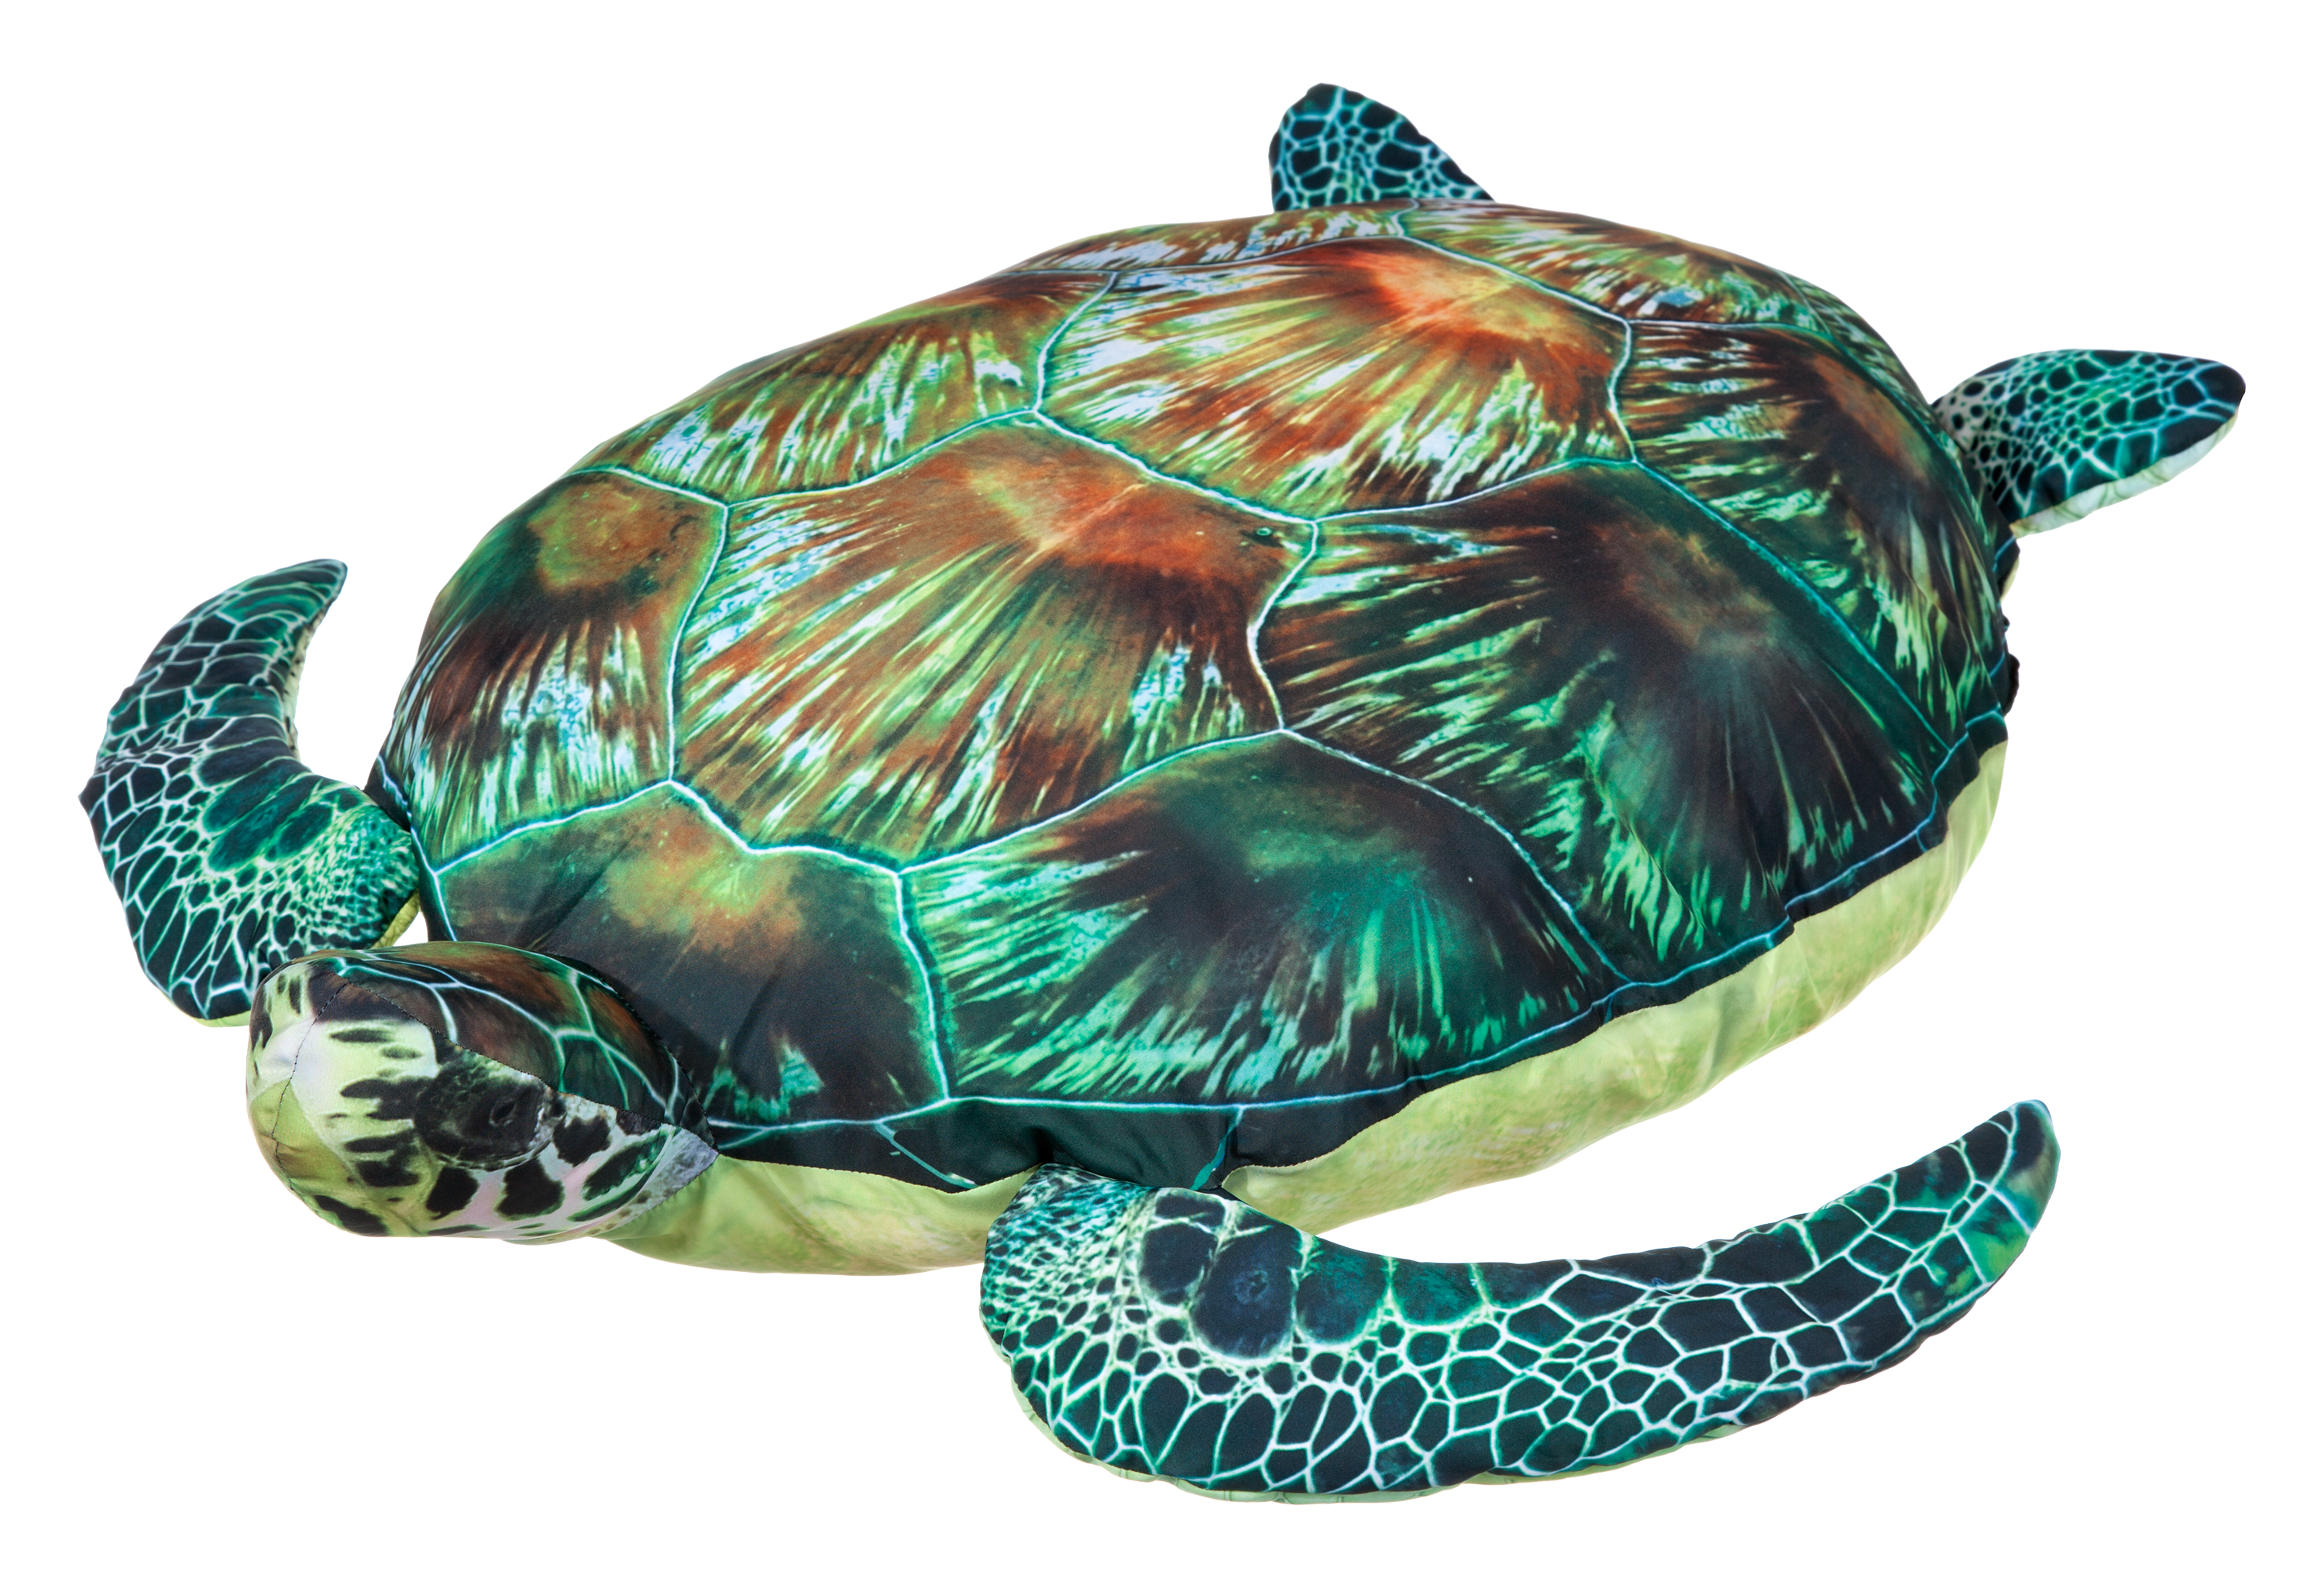 Bass Pro Shops Giant Stuffed Sea Turtle for Kids